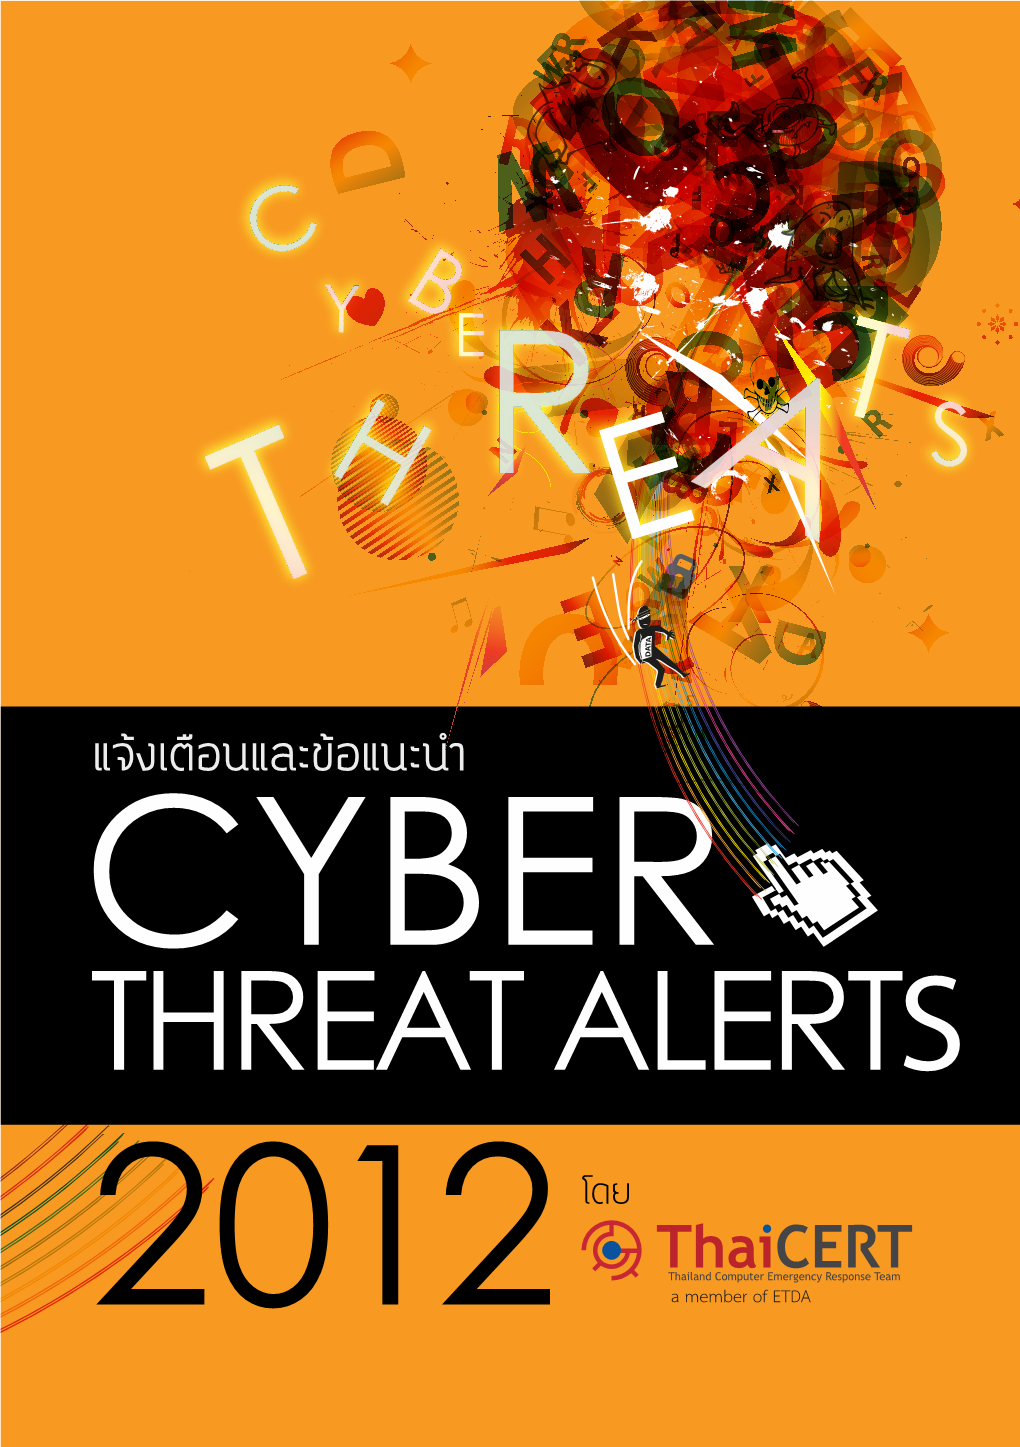 CYBER THREAT ALERTS 2012 Â´Â บทความ CYBER THREAT ALERTS 2012 โดย Thaicert